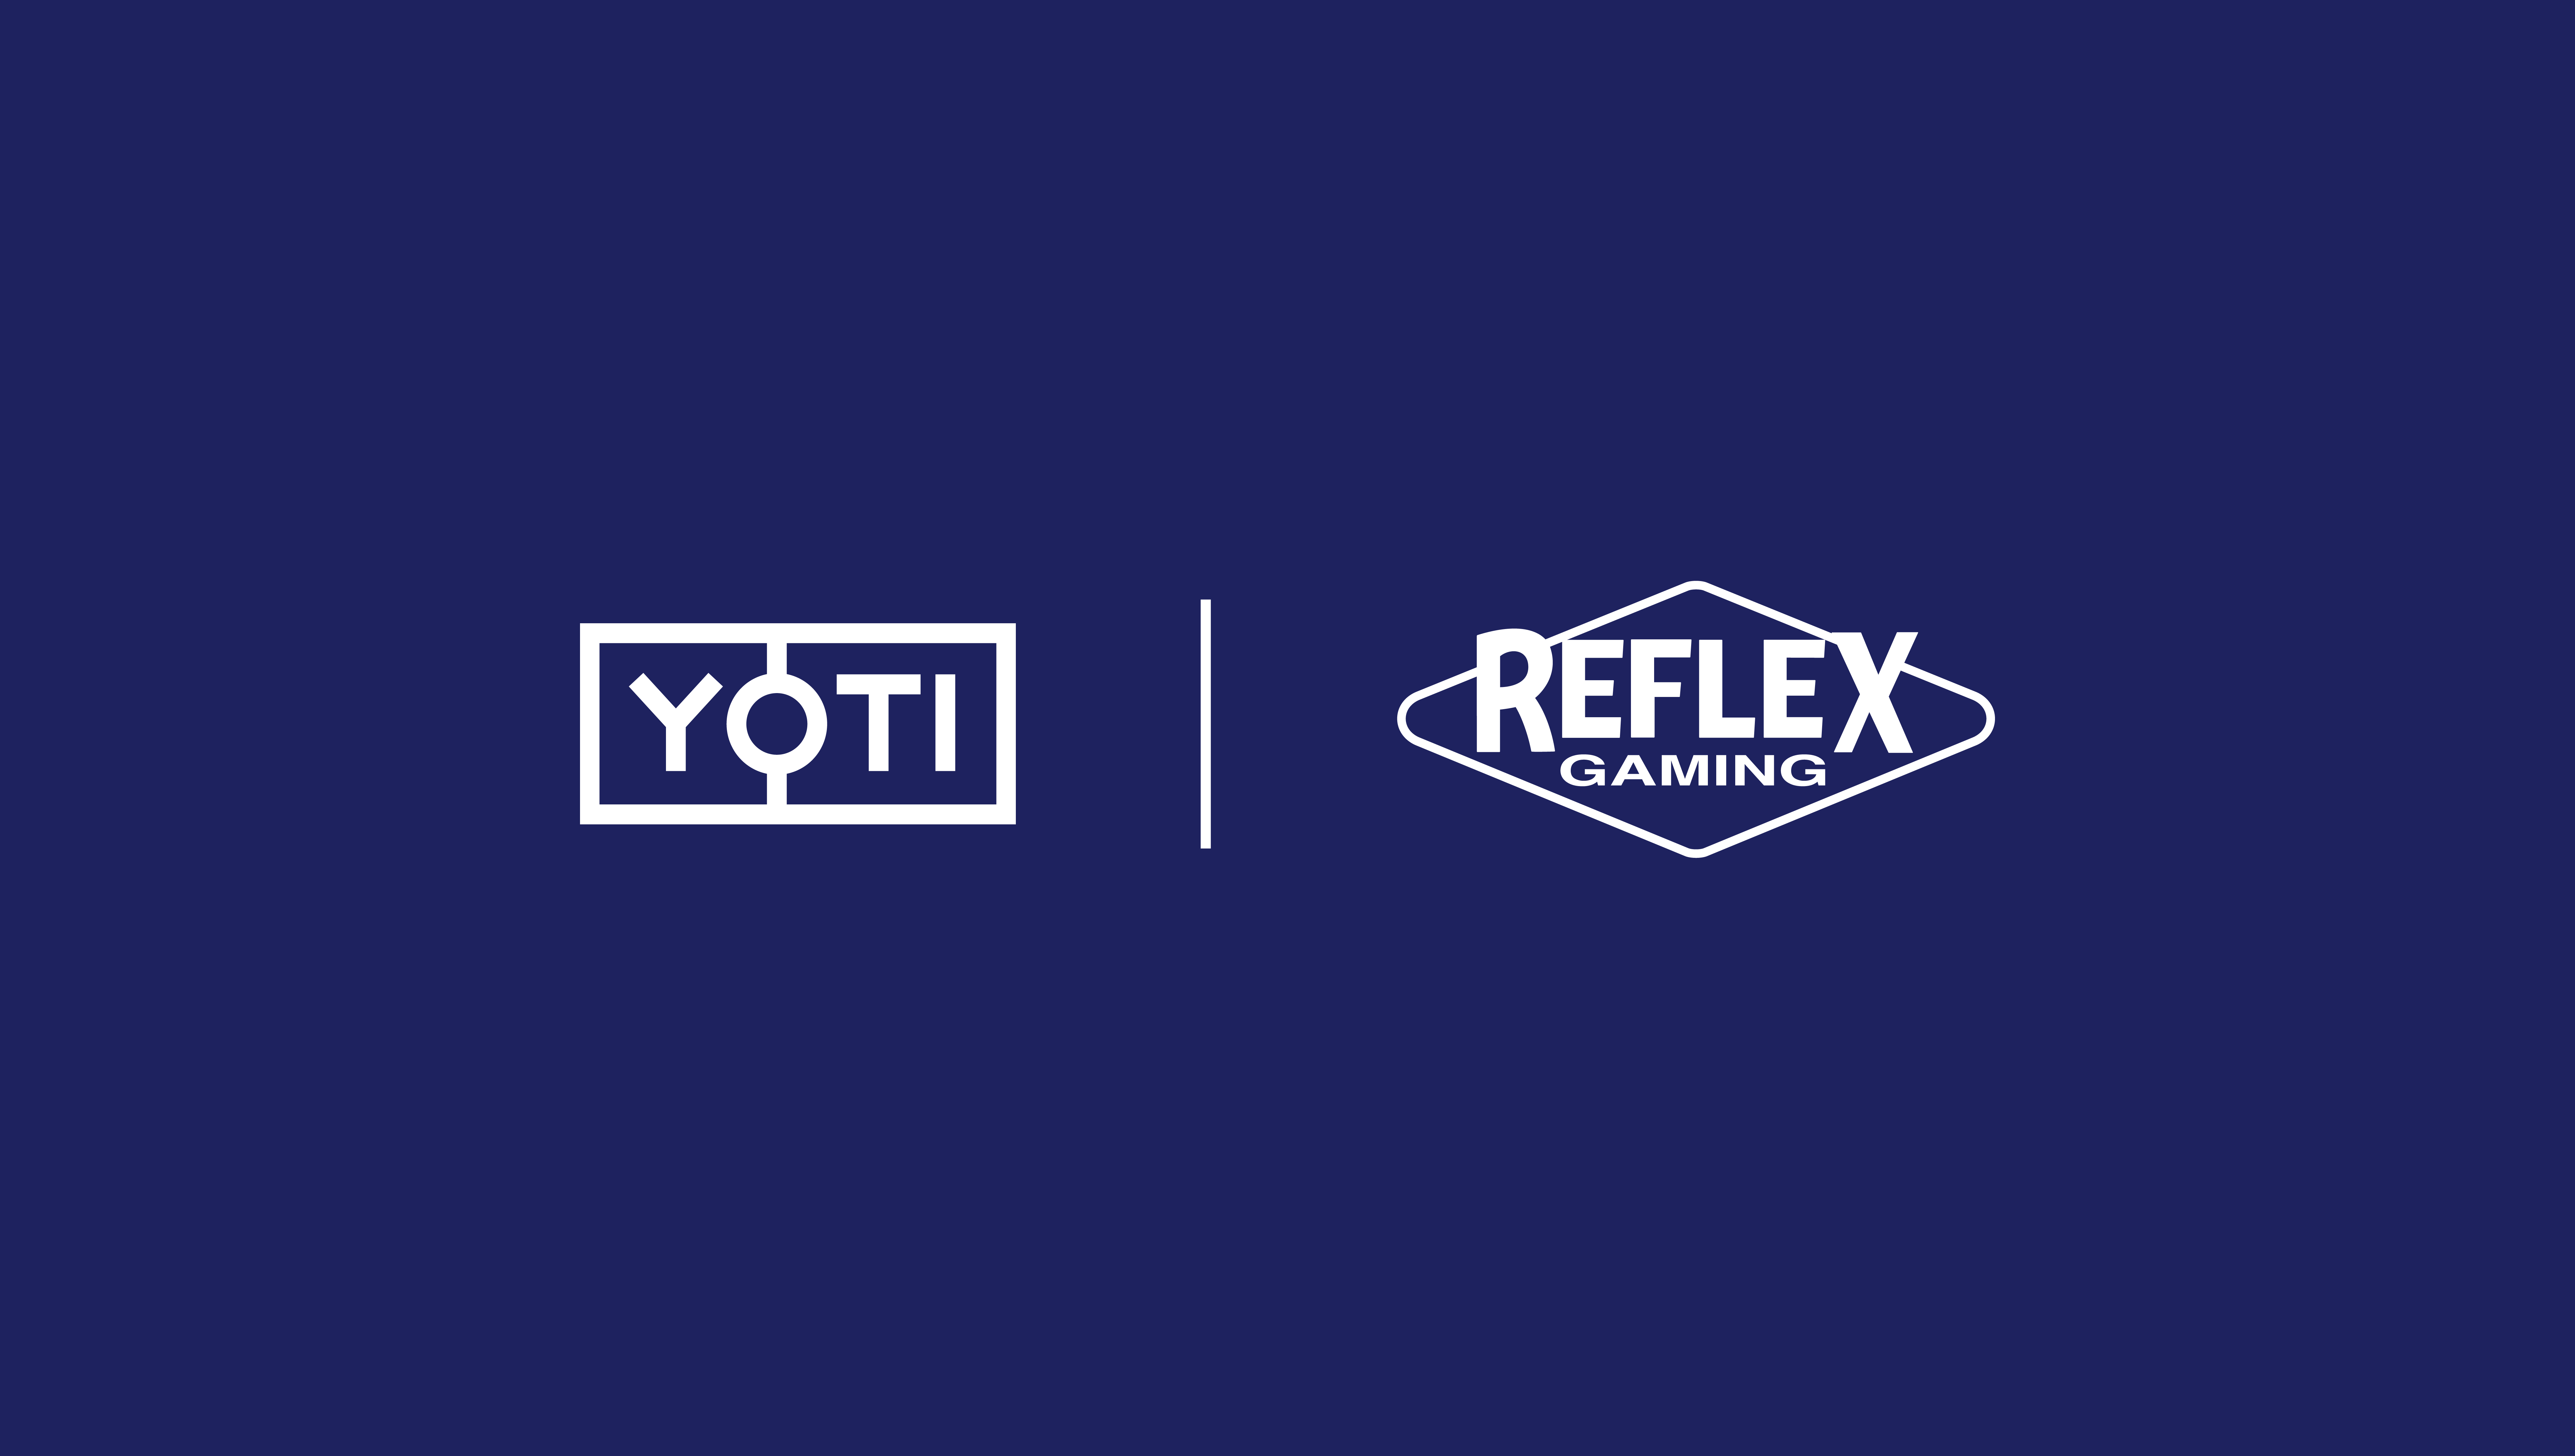 Yoti and ReflexGaming logos presented together